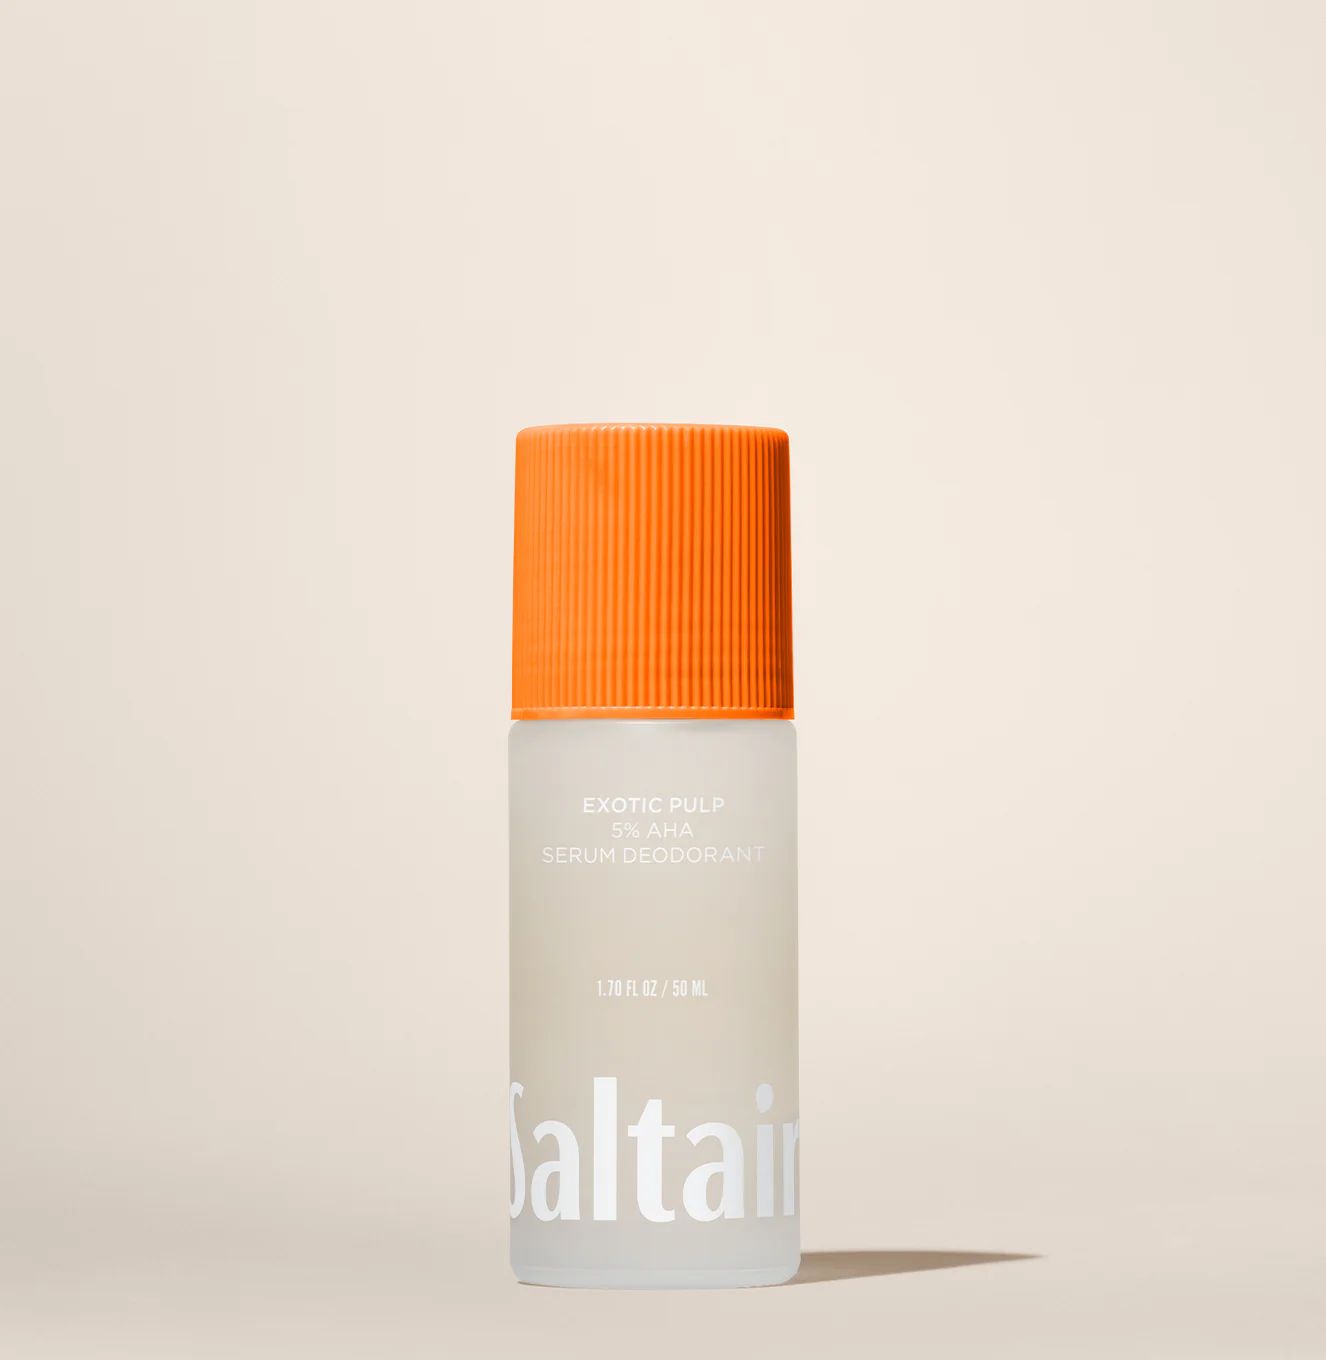 Serum Deodorant With 5% AHA - Exotic Pulp | Saltair | Saltair